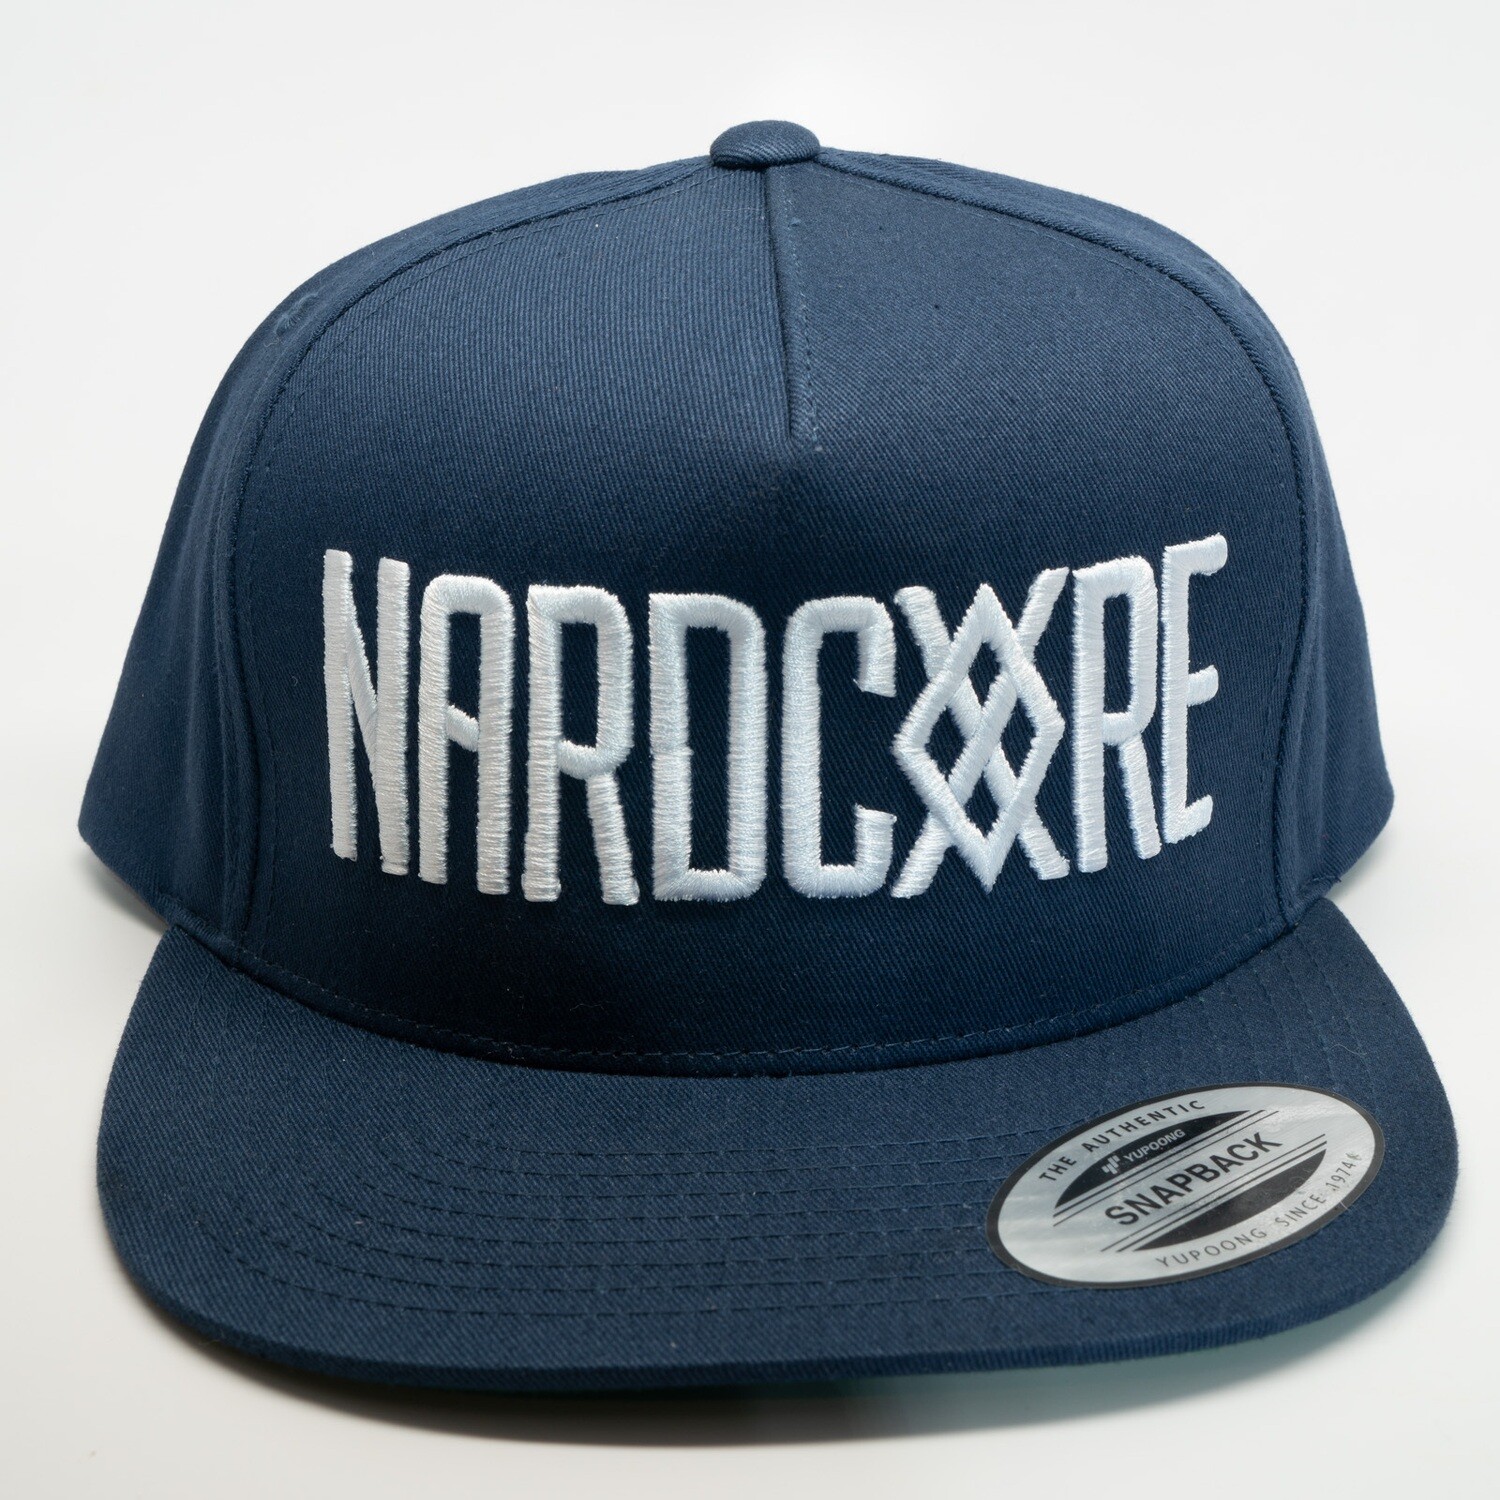 Nardcore Snapback Hat